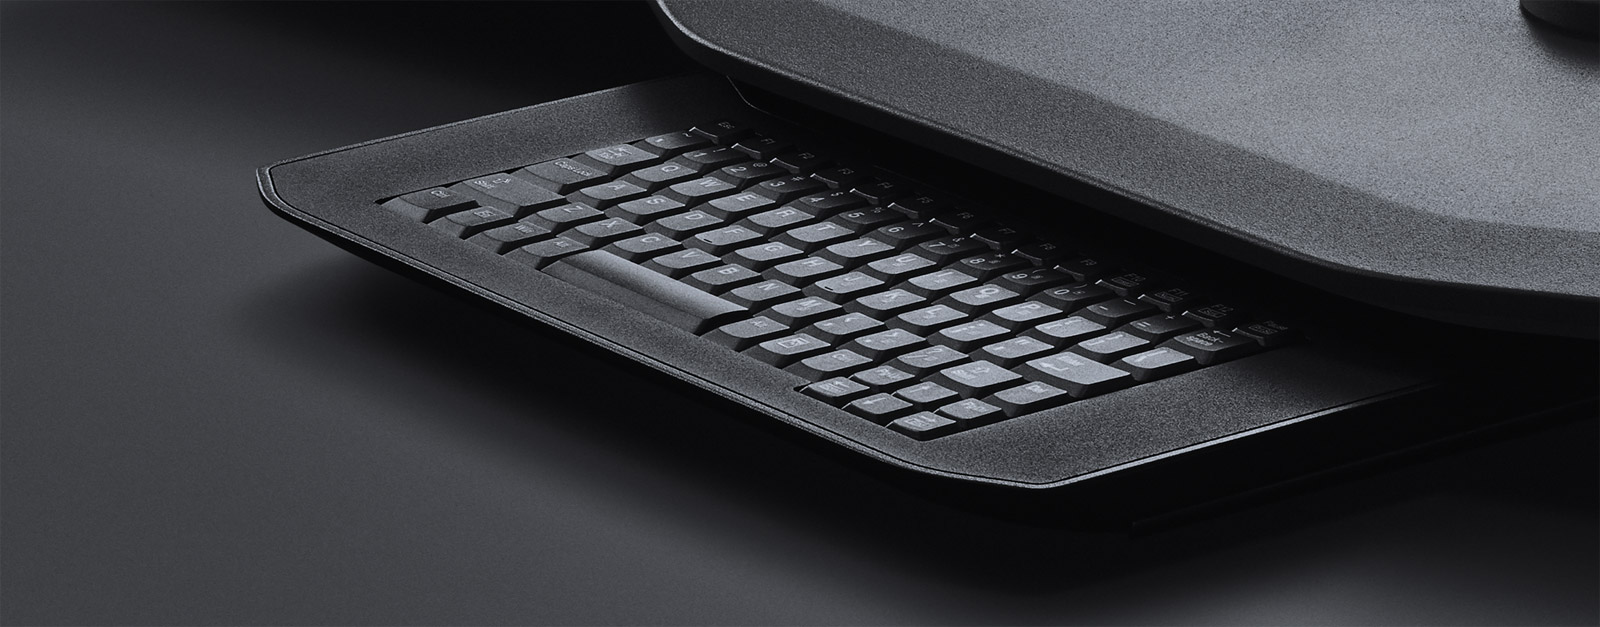 Slide Out Keyboard